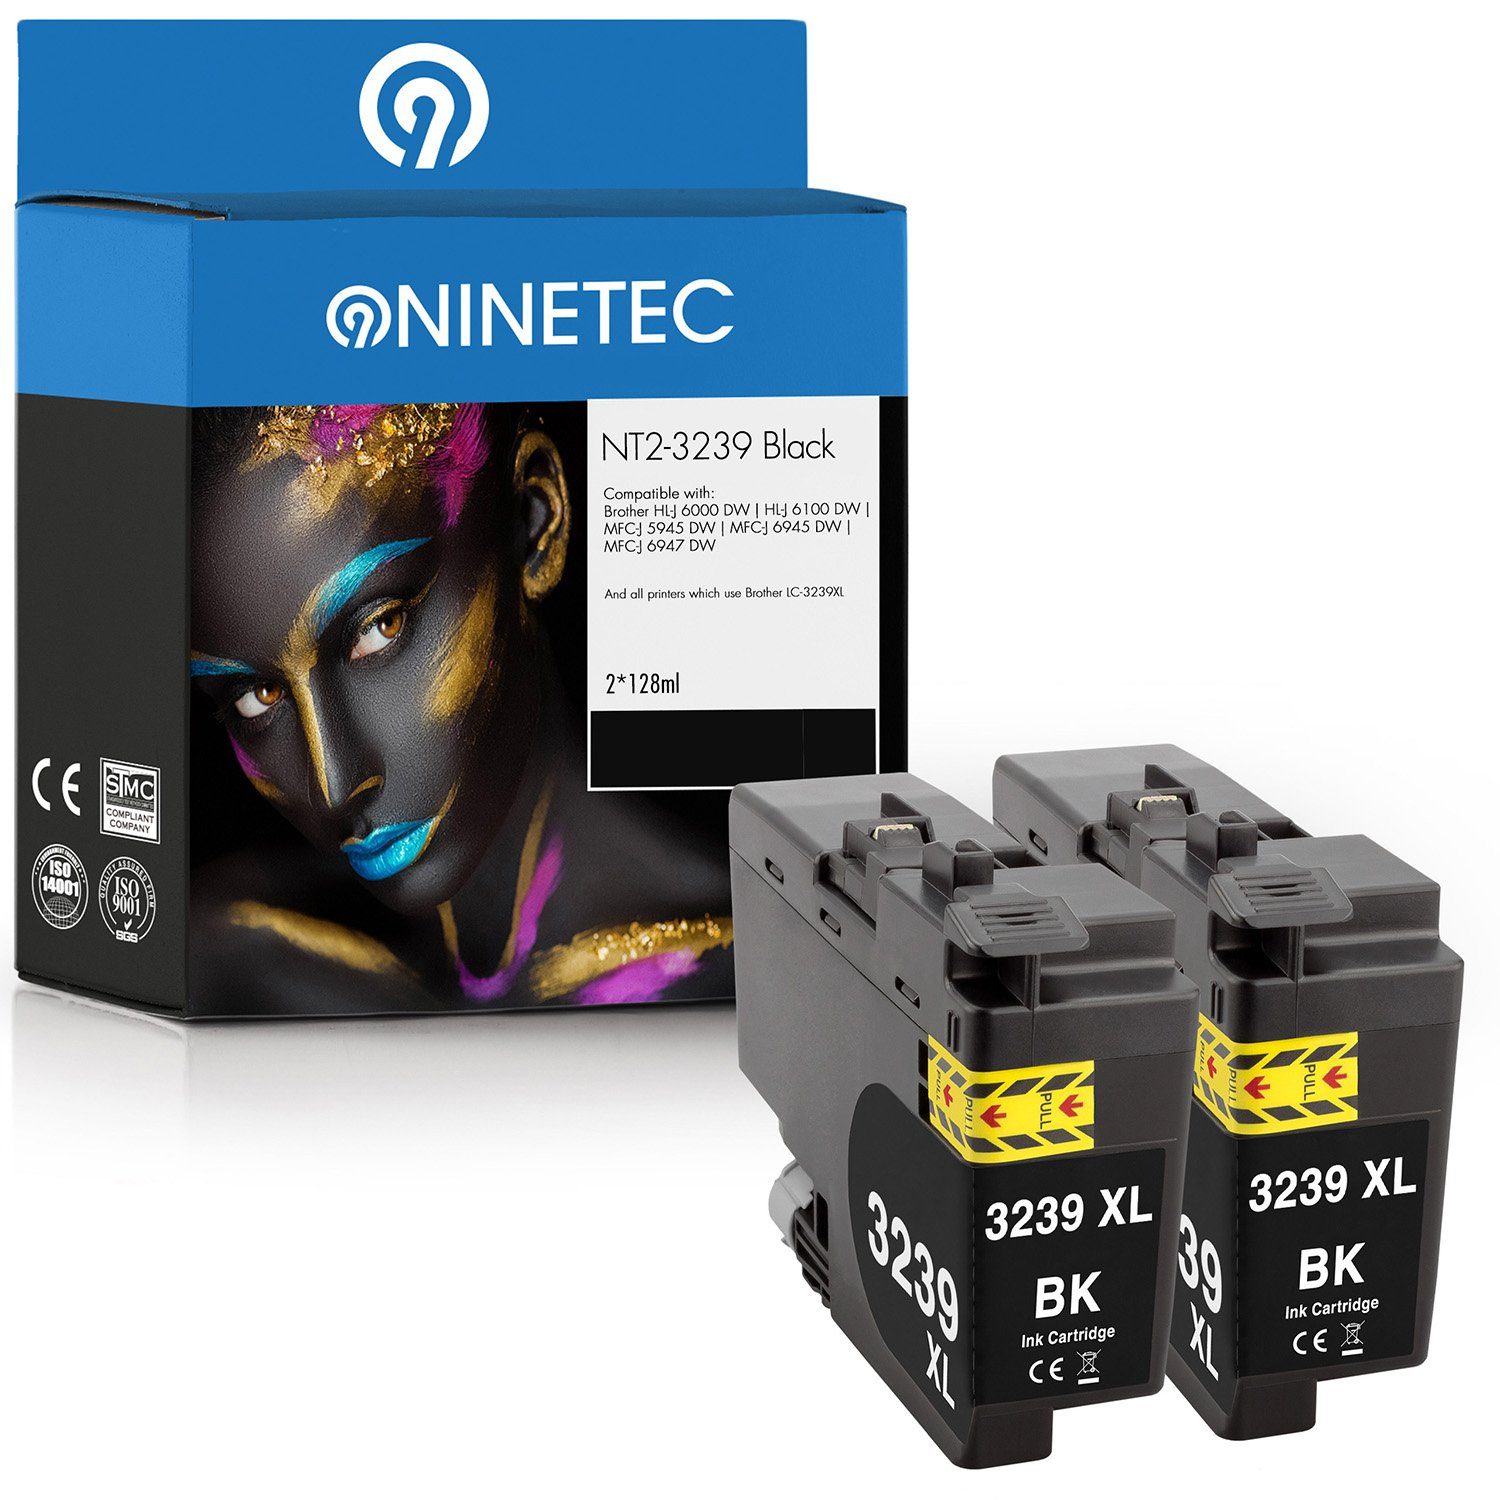 2er LC-3239 Set Brother ersetzt 3239XL Tintenpatrone NINETEC